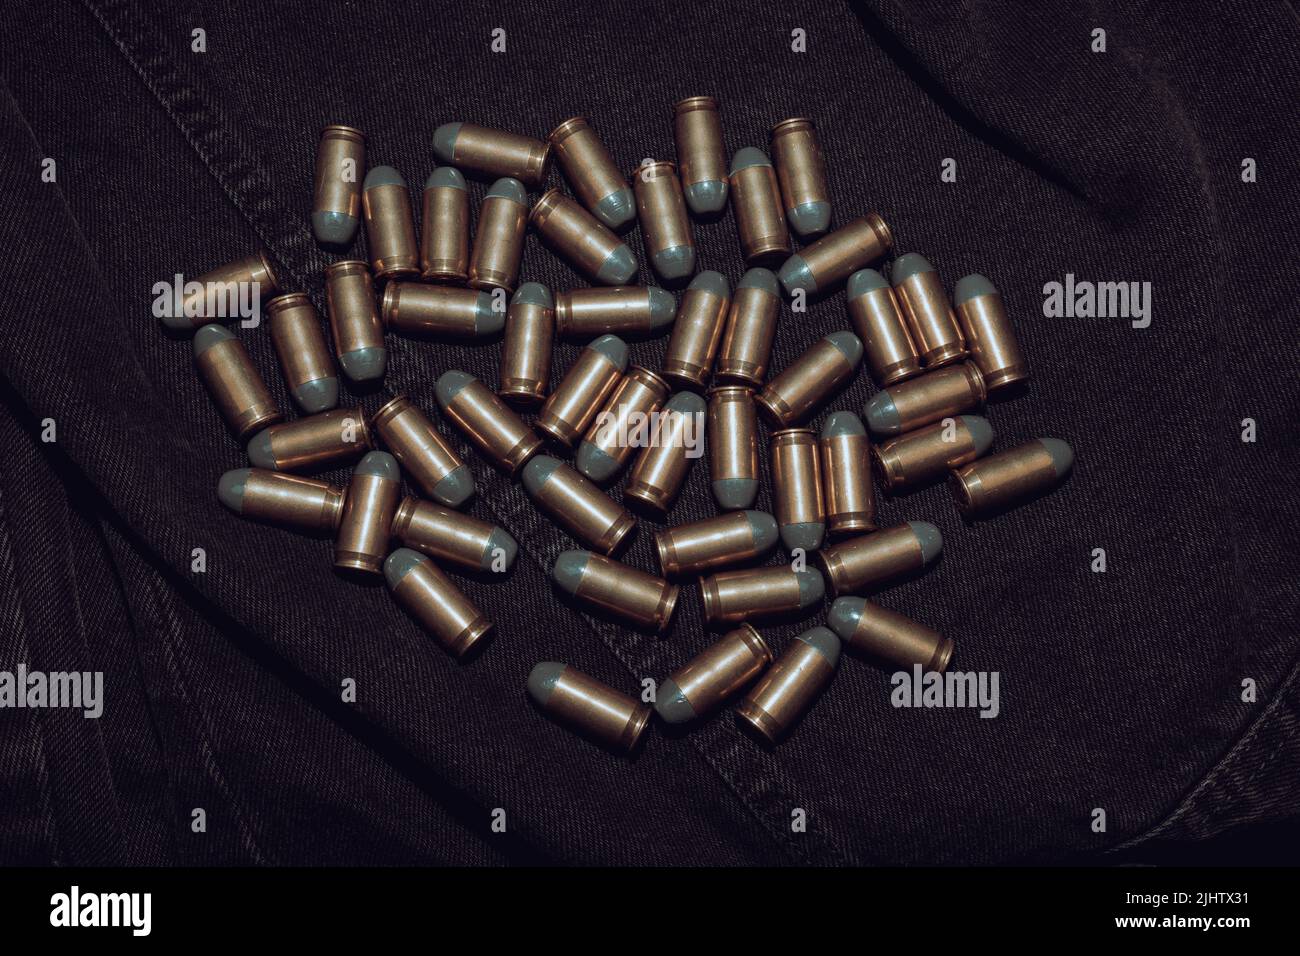 Many .45 ACP cartridges on a black denim background Stock Photo